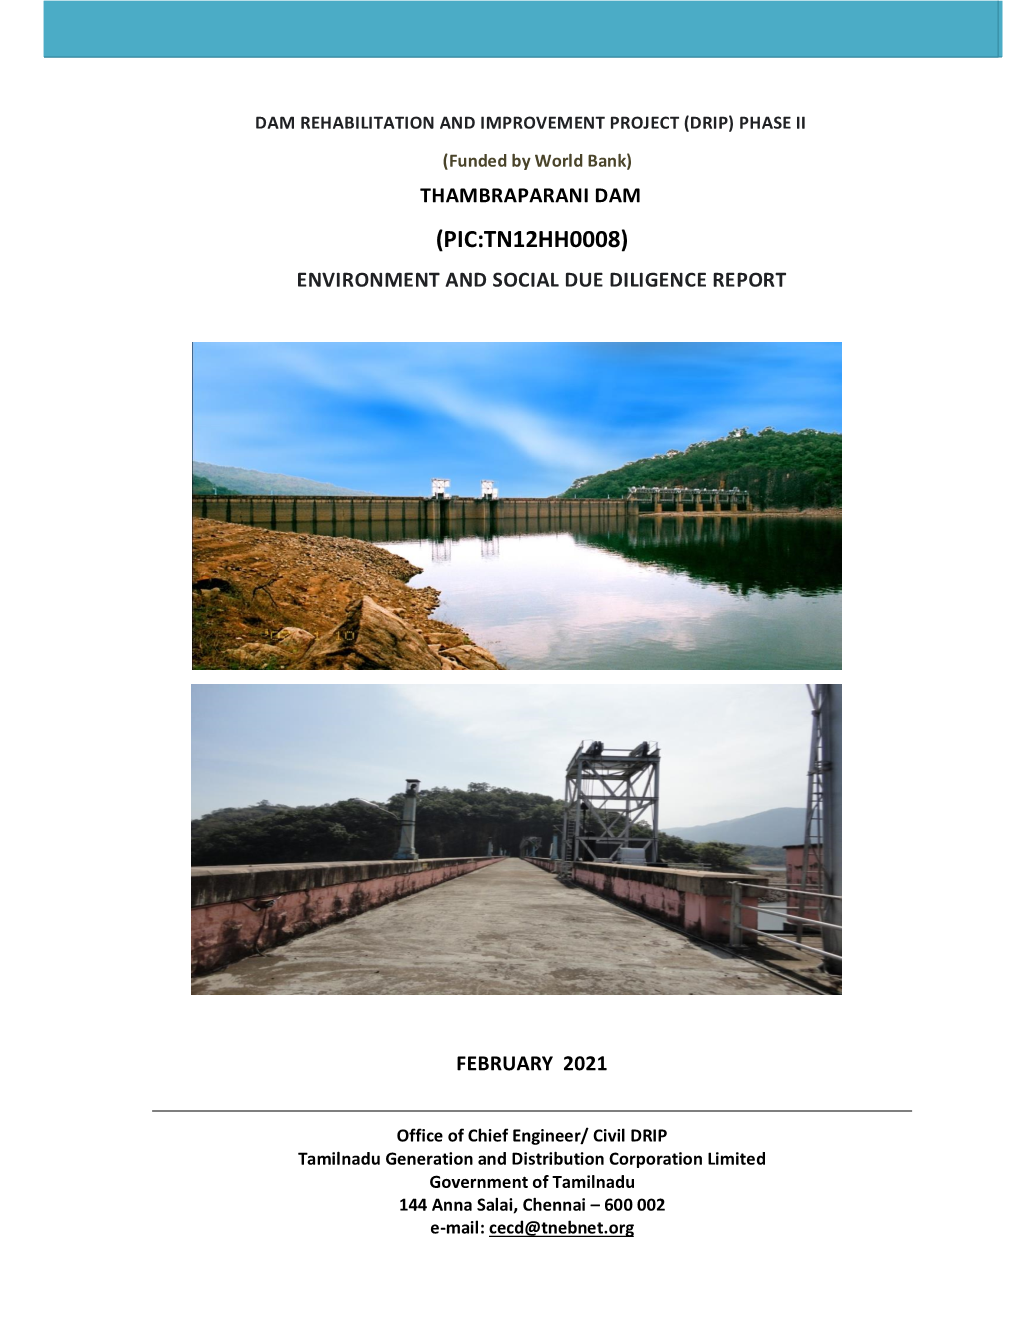 Thambraparani Dam